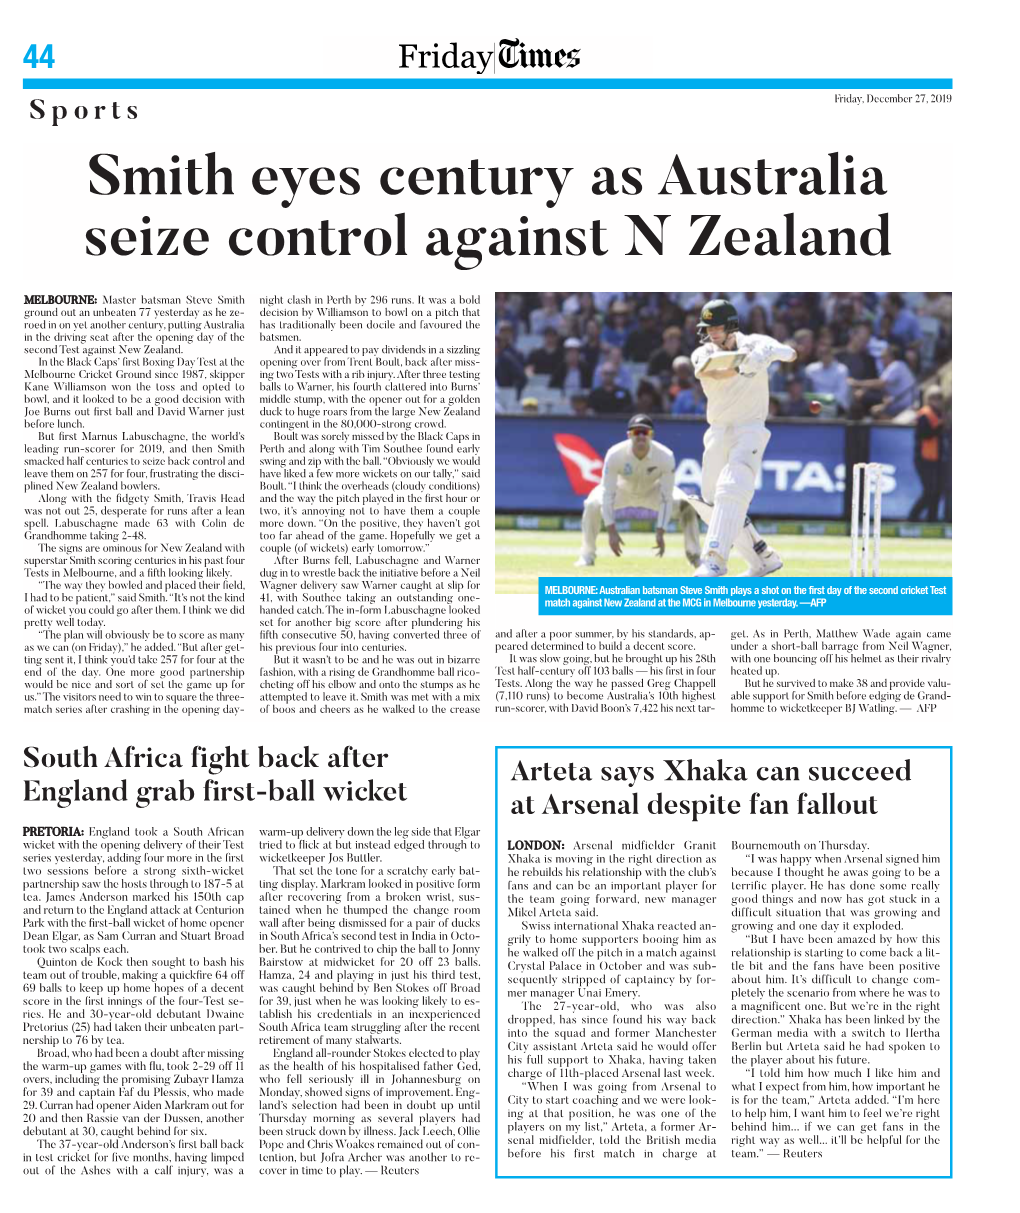 Smith Eyes Century As Australia Seize Control Against N Zealand